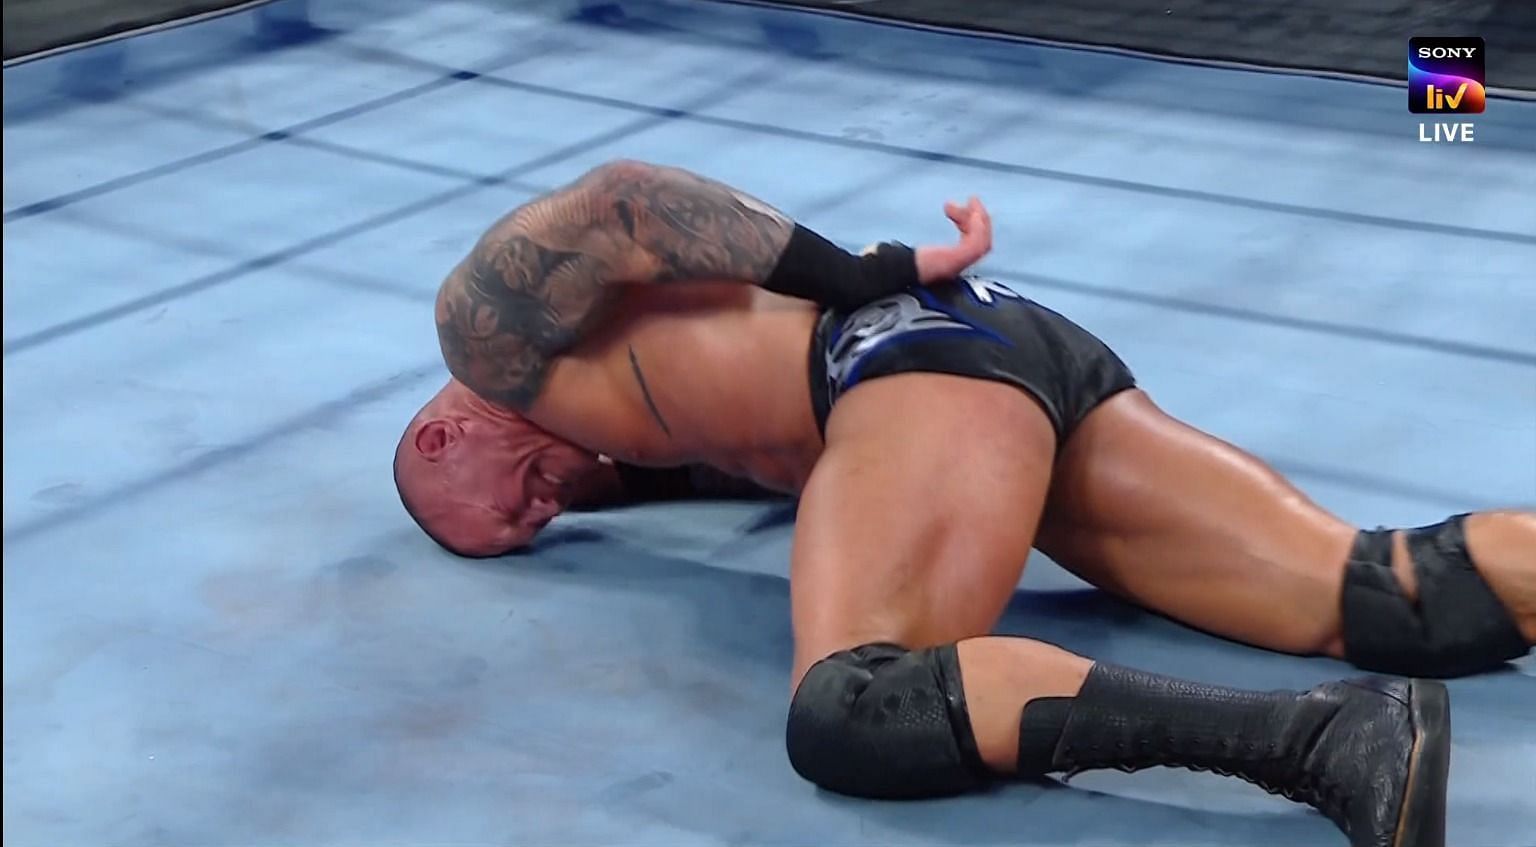 Randy Orton was seemingly hurt at Elimination Chamber